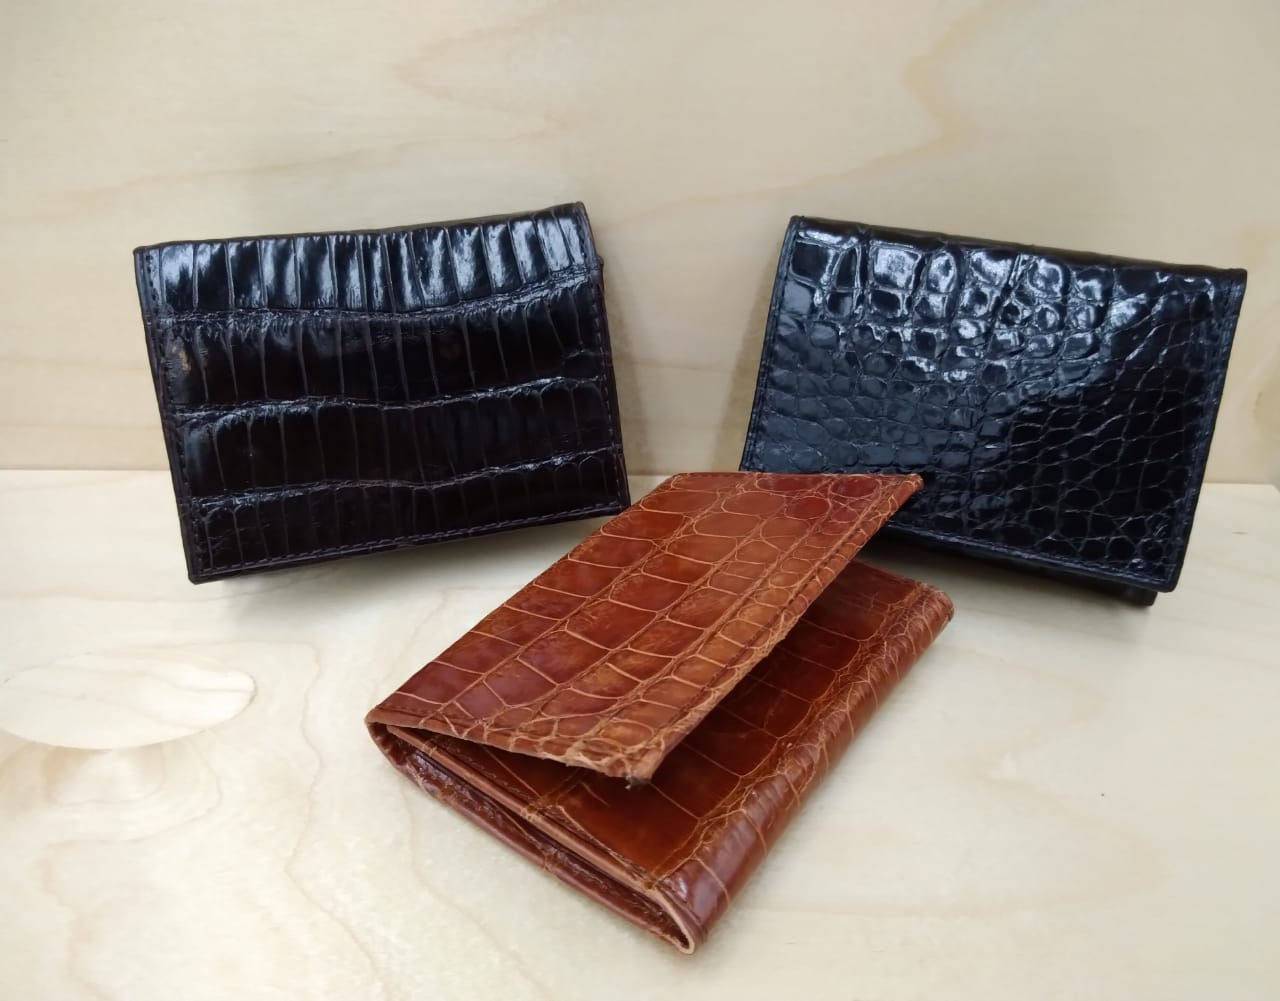 Crocodile Leather Wallet